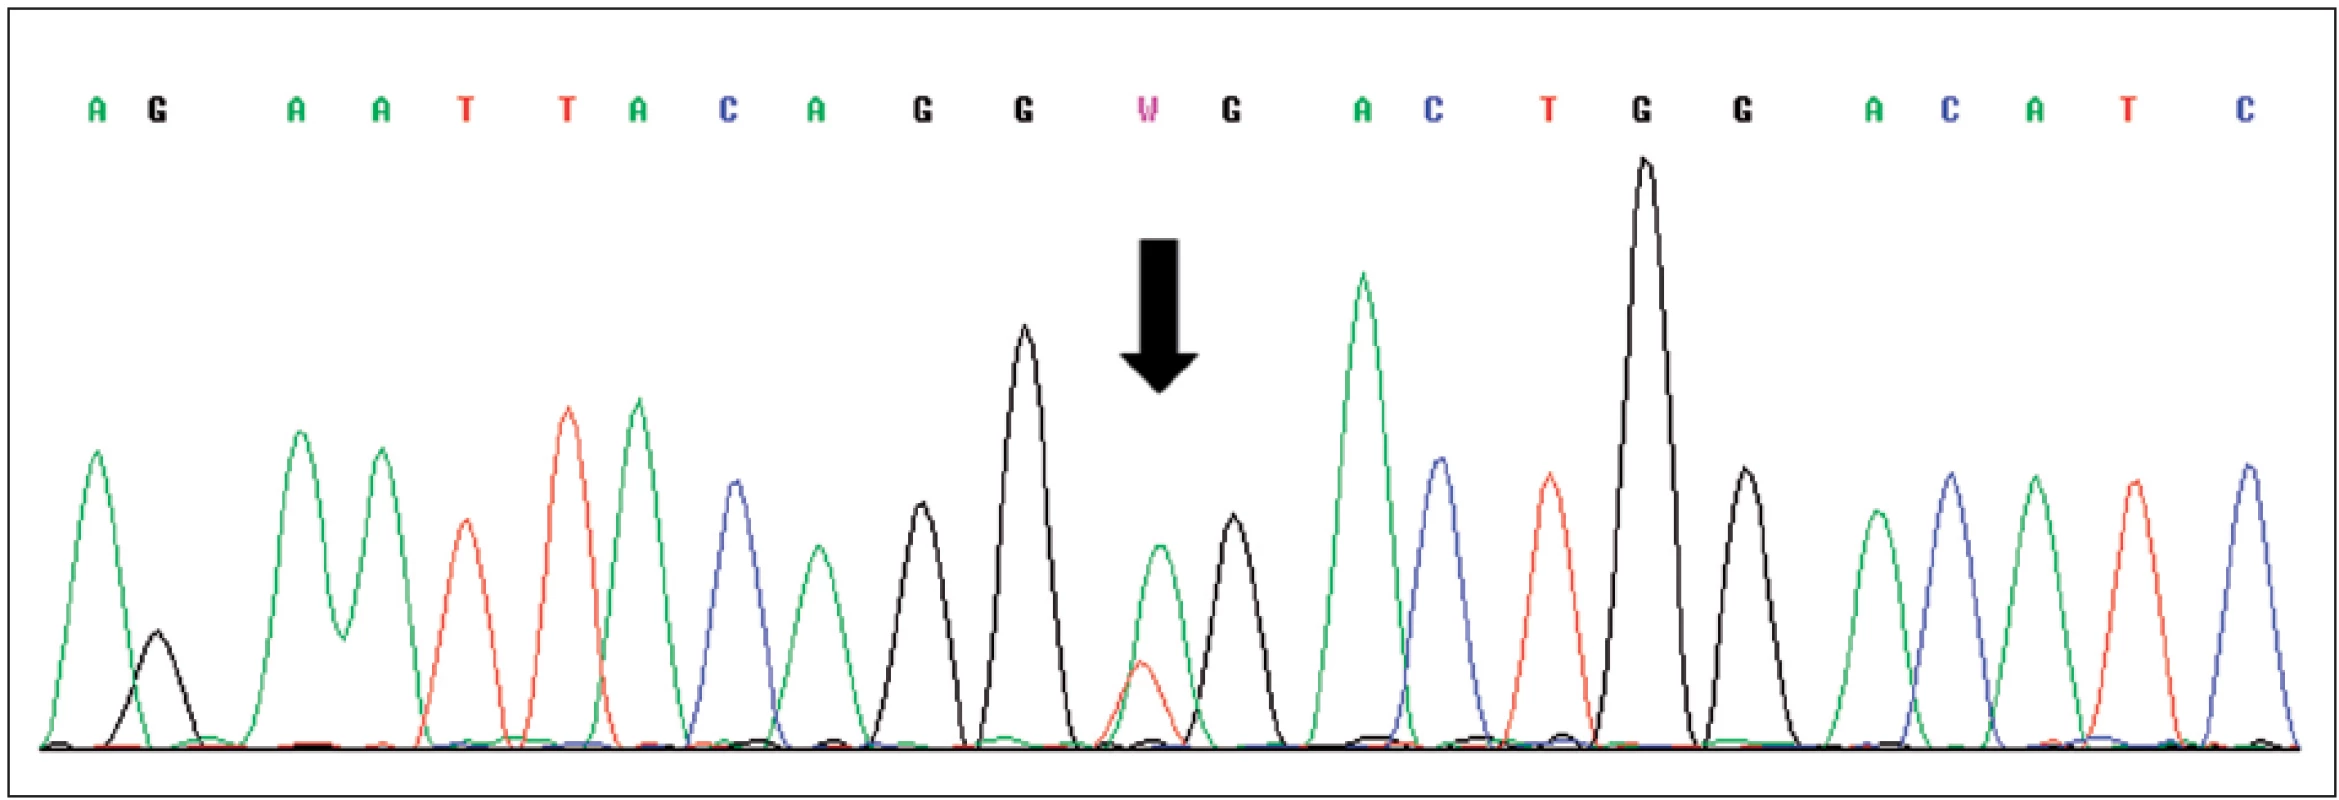 Sekvence části genu VHL, šipka označuje mutaci c.529A&gt;T (p.R177X) v exonu 3
Fig. 3. Sequence of exon 3 of VHL gene with mutation c.529A&gt;T (p.R177X) indicated by arrow